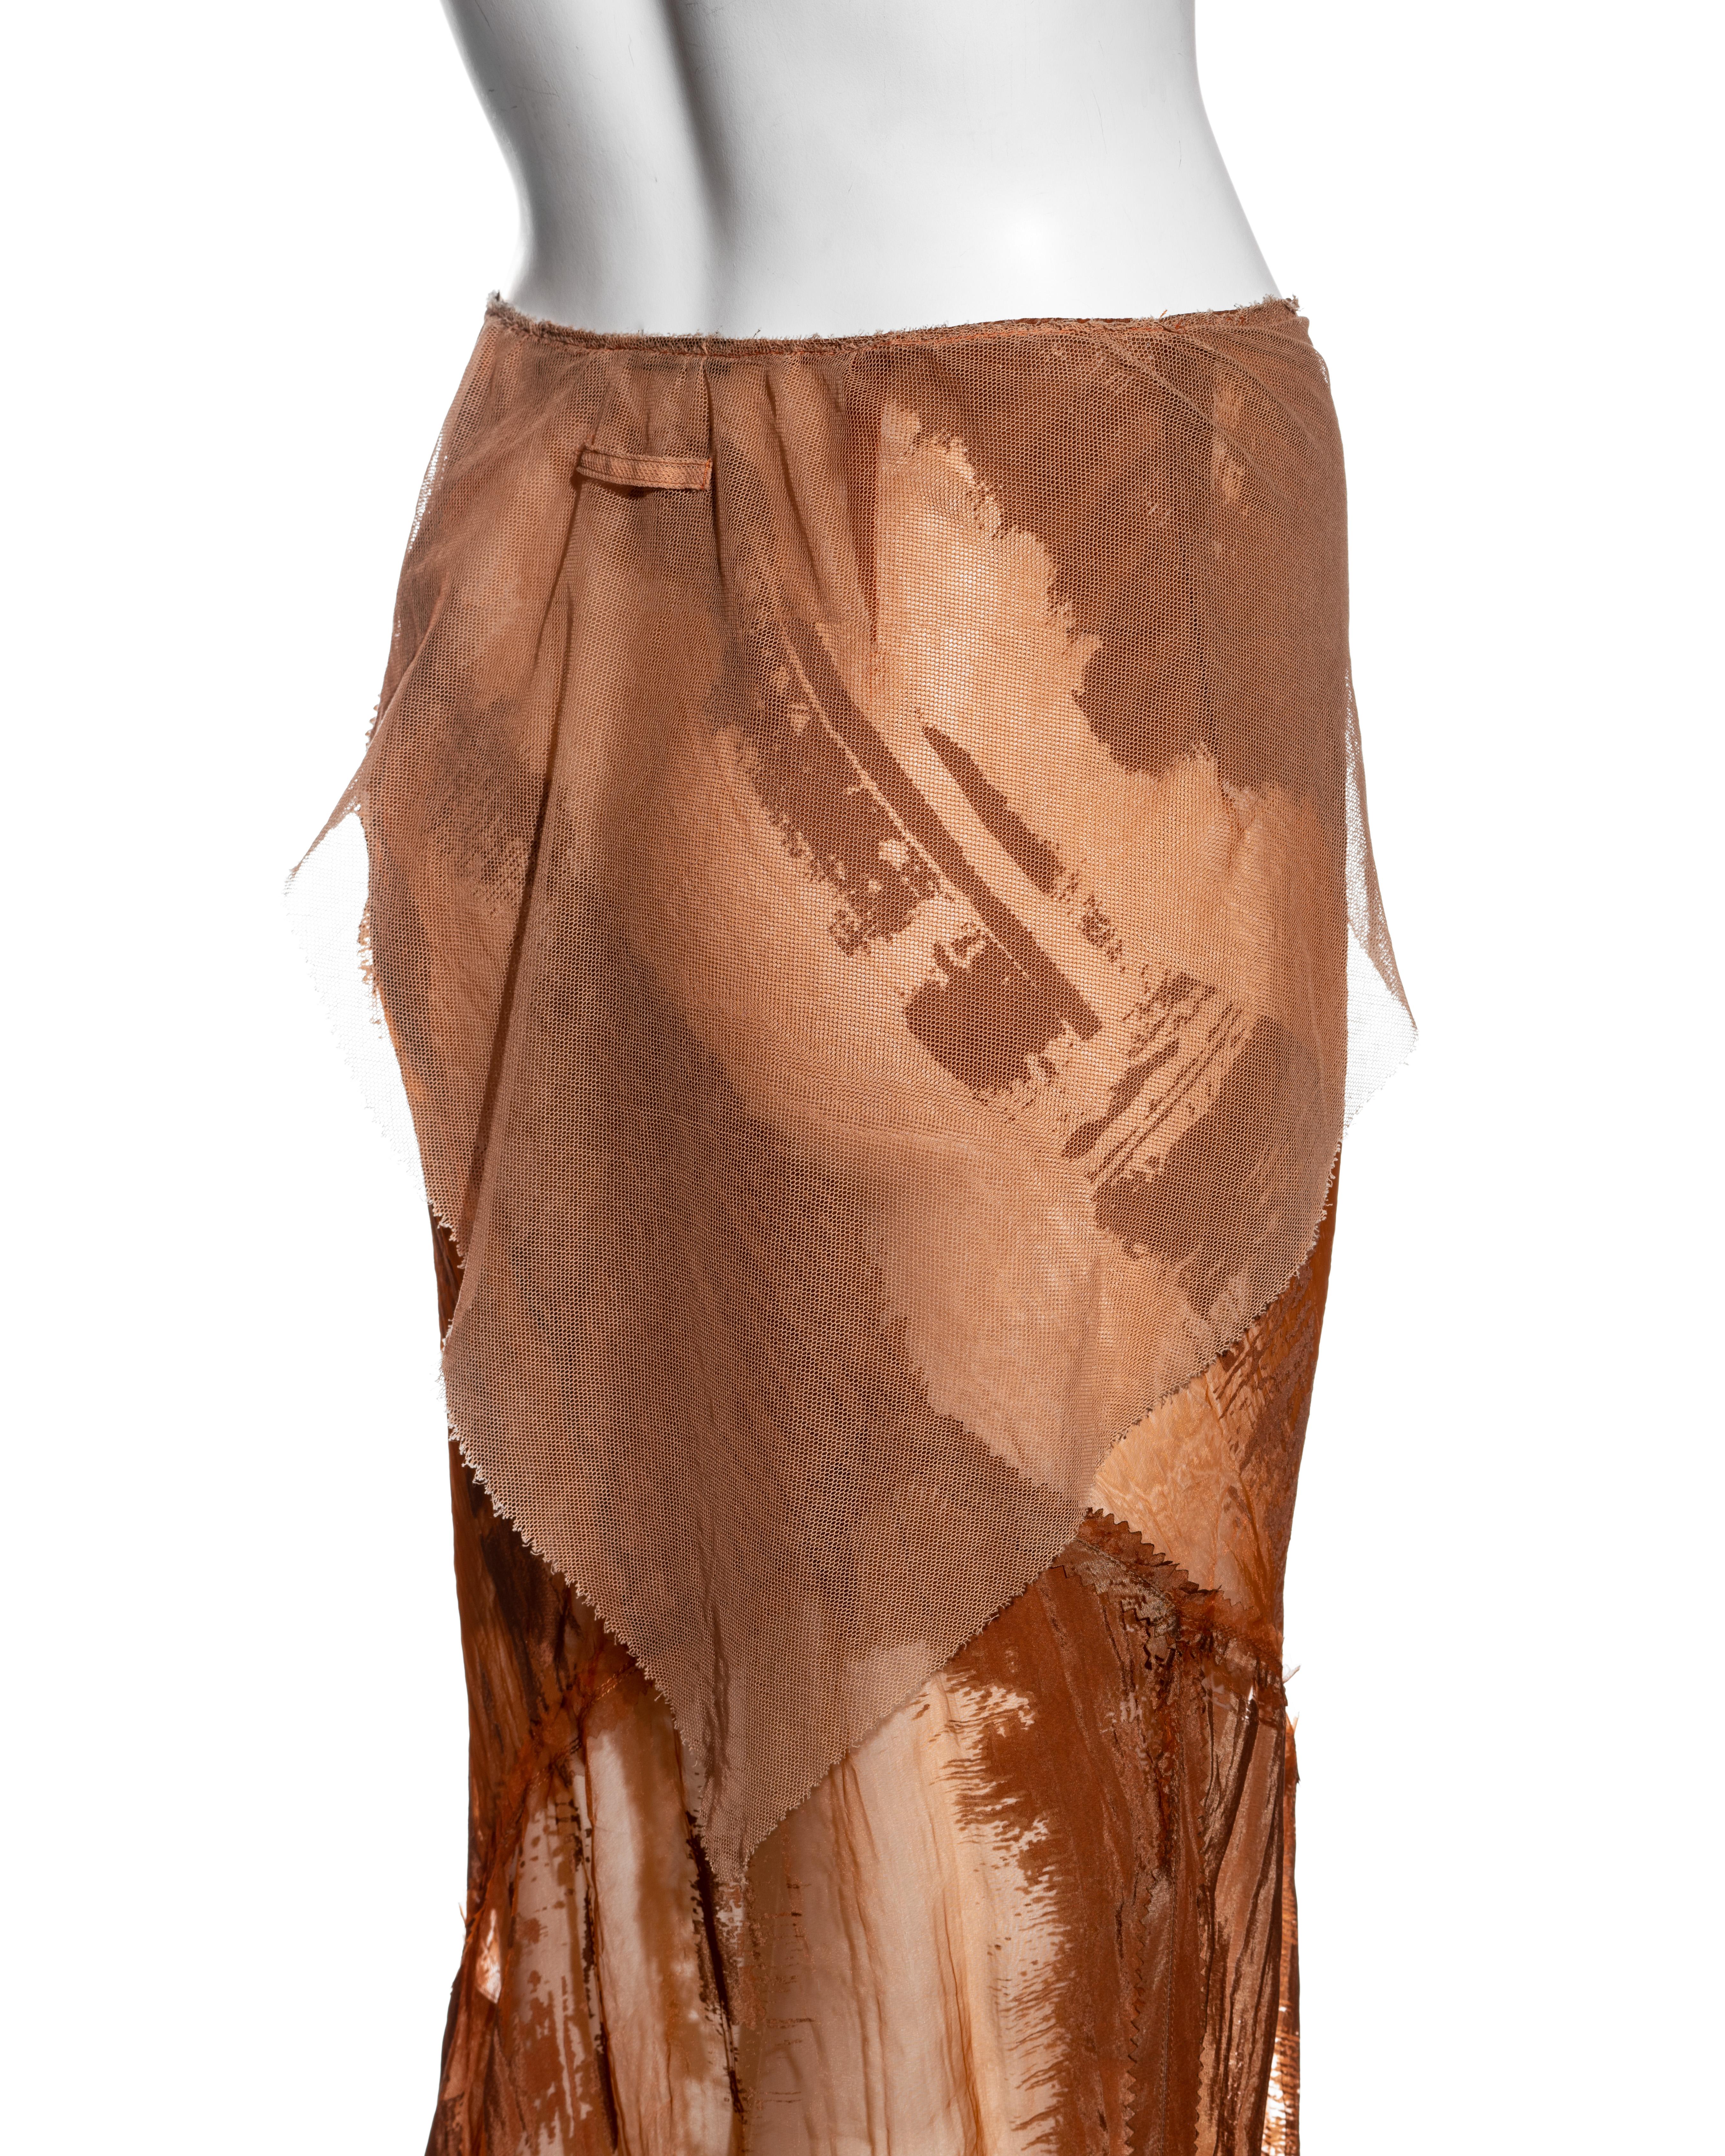 Jean Paul Gaultier clay organza bias cut maxi skirt and blouse set, ss 2002 2